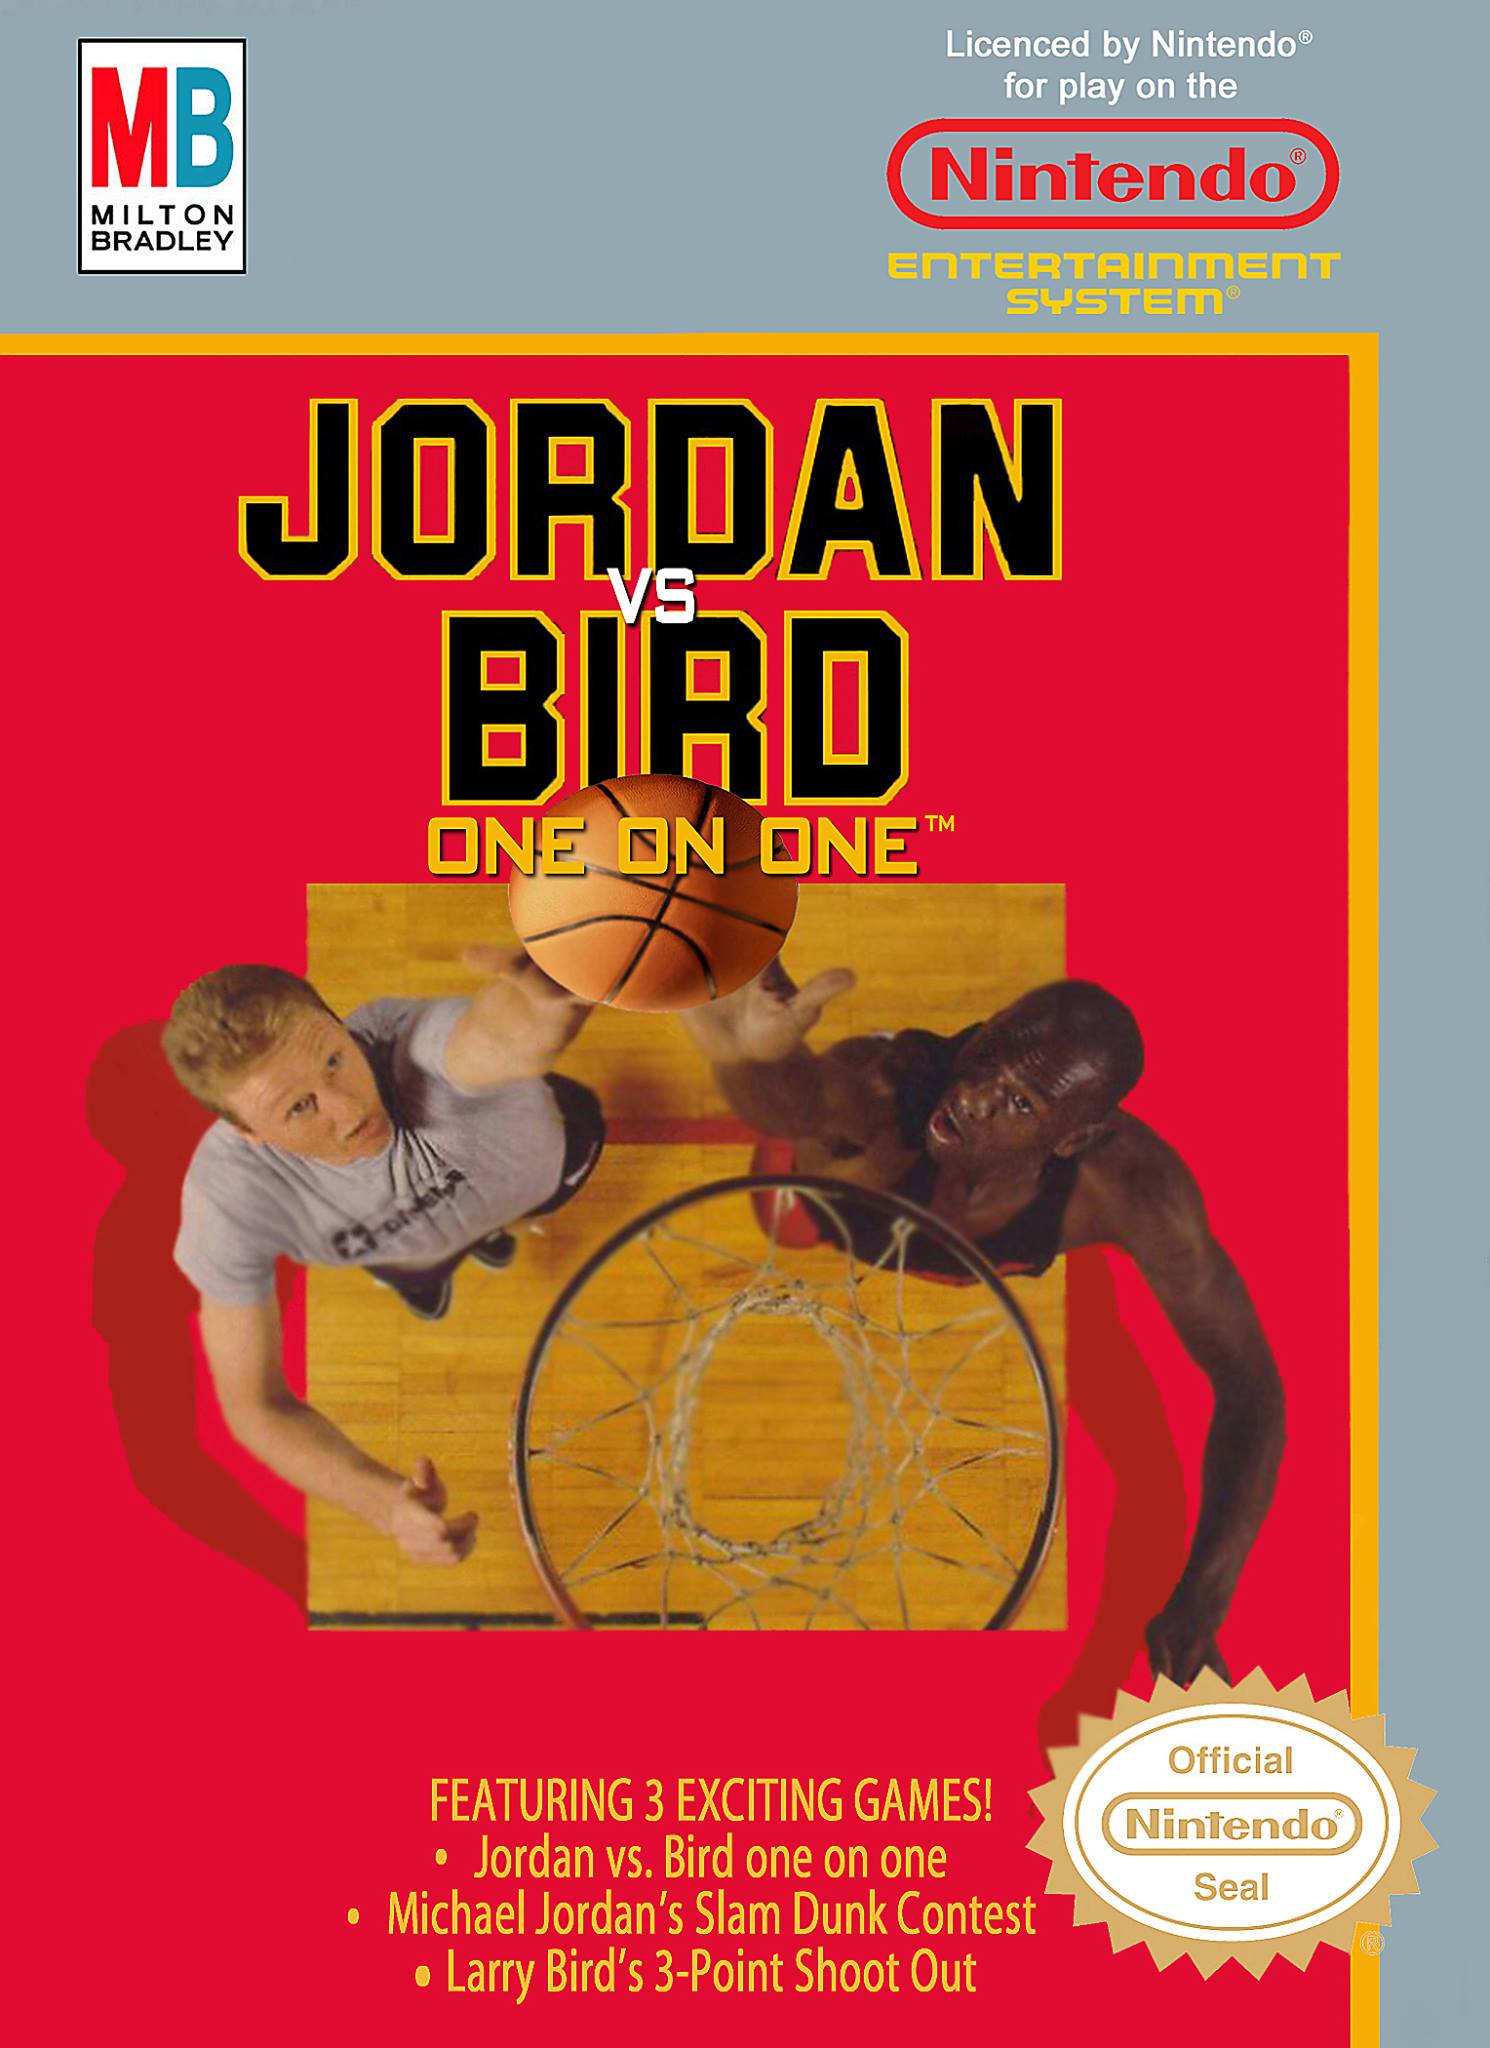 Boys of the 80s - jordan vs bird one on one